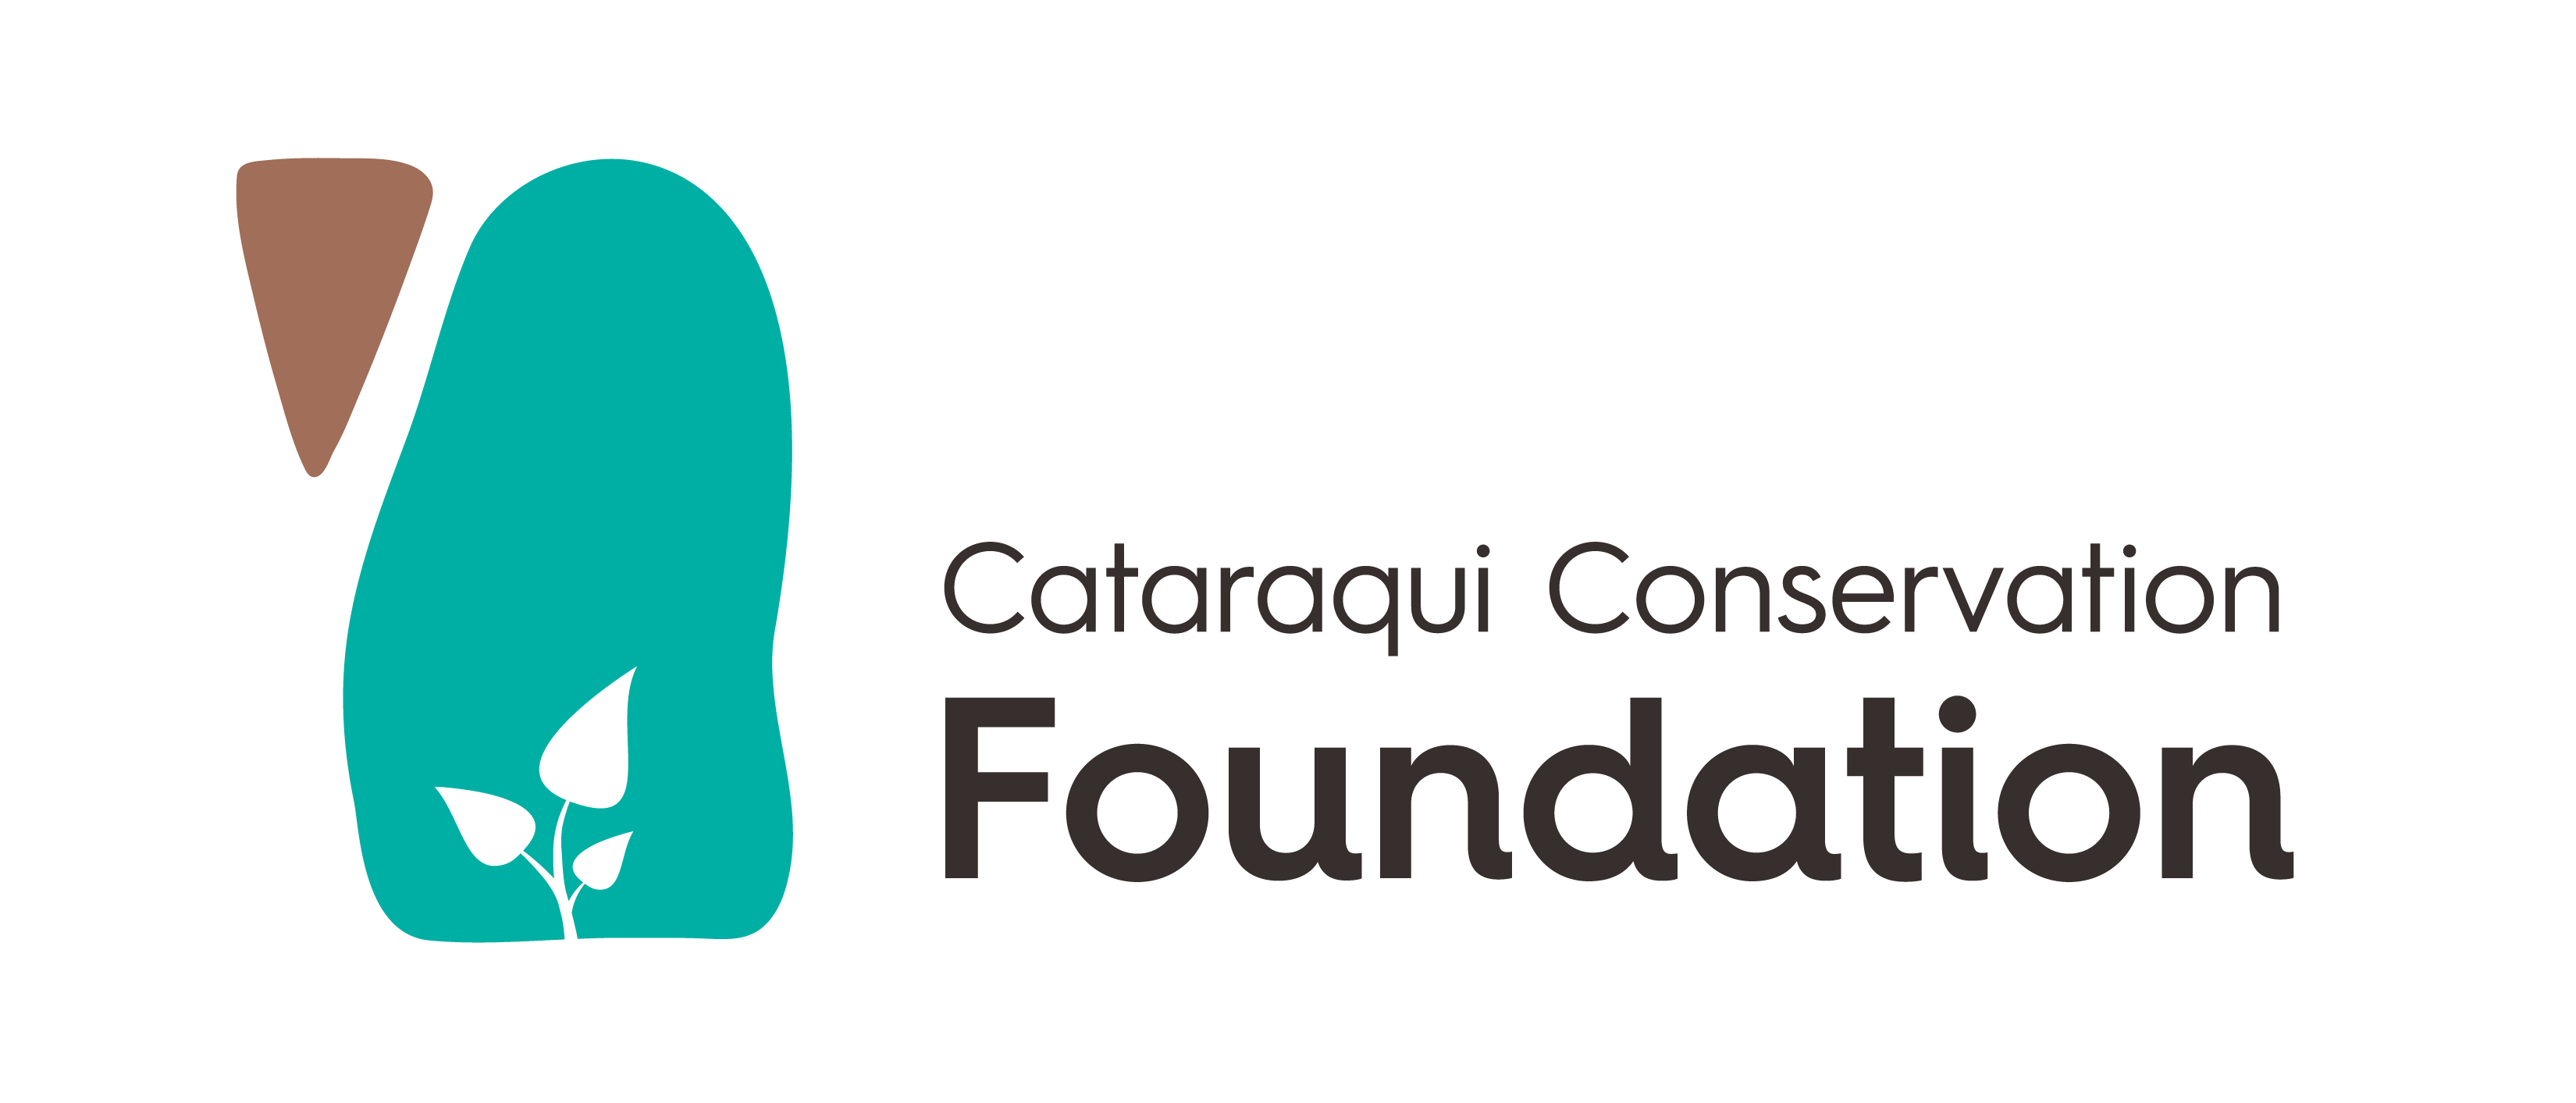 Cataraqui Conservation Foundation